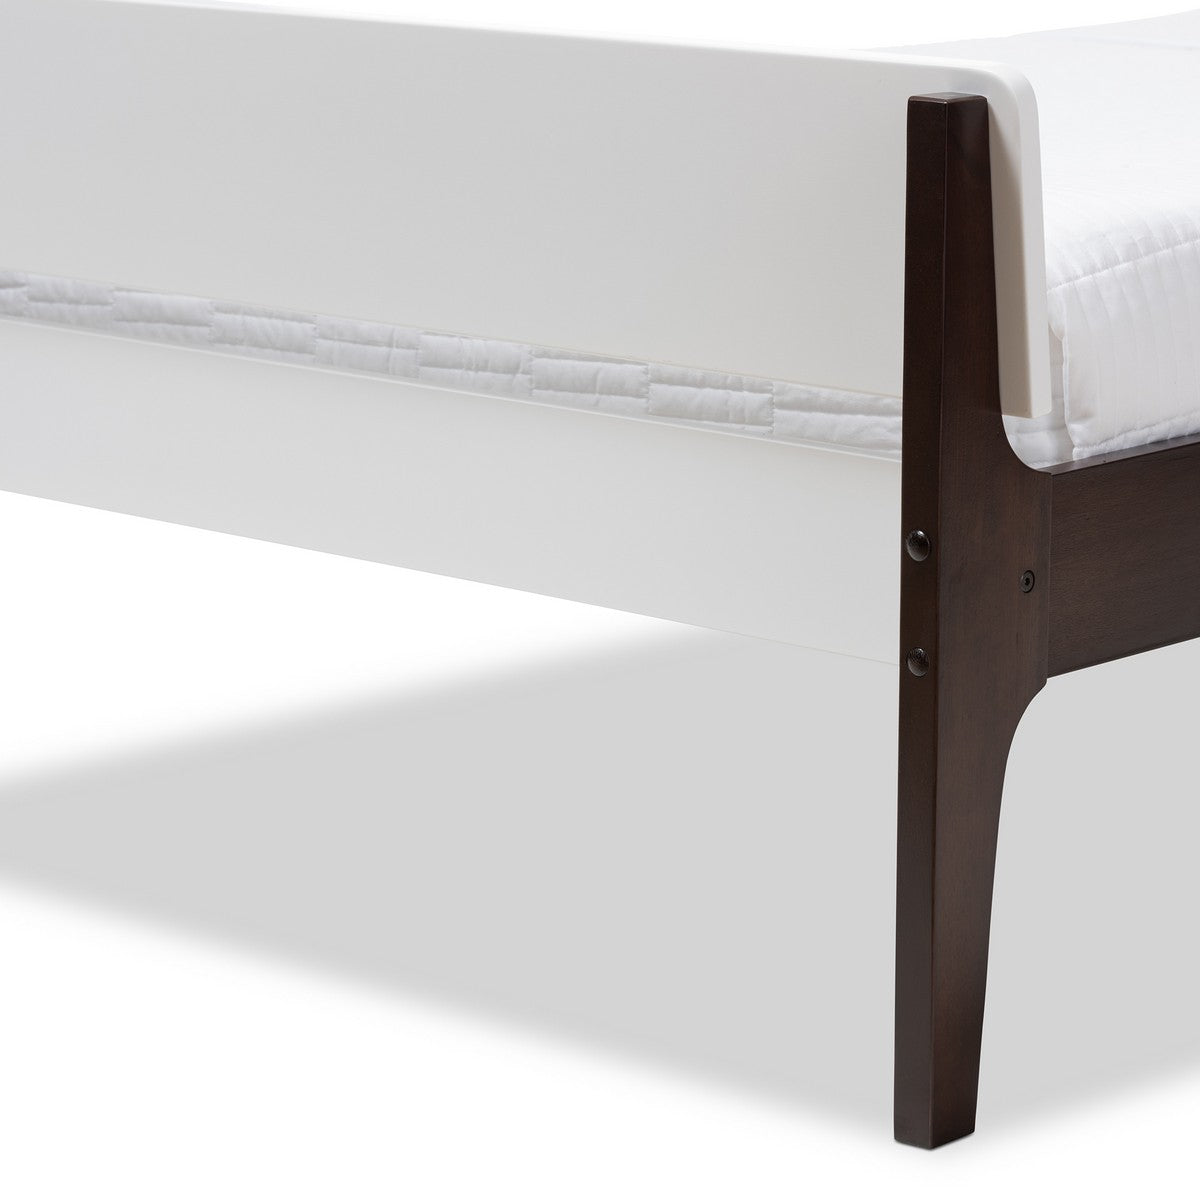 Baxton Studio Nereida Modern Classic Mission Style White and Dark Brown-Finished Wood Twin Platform Bed